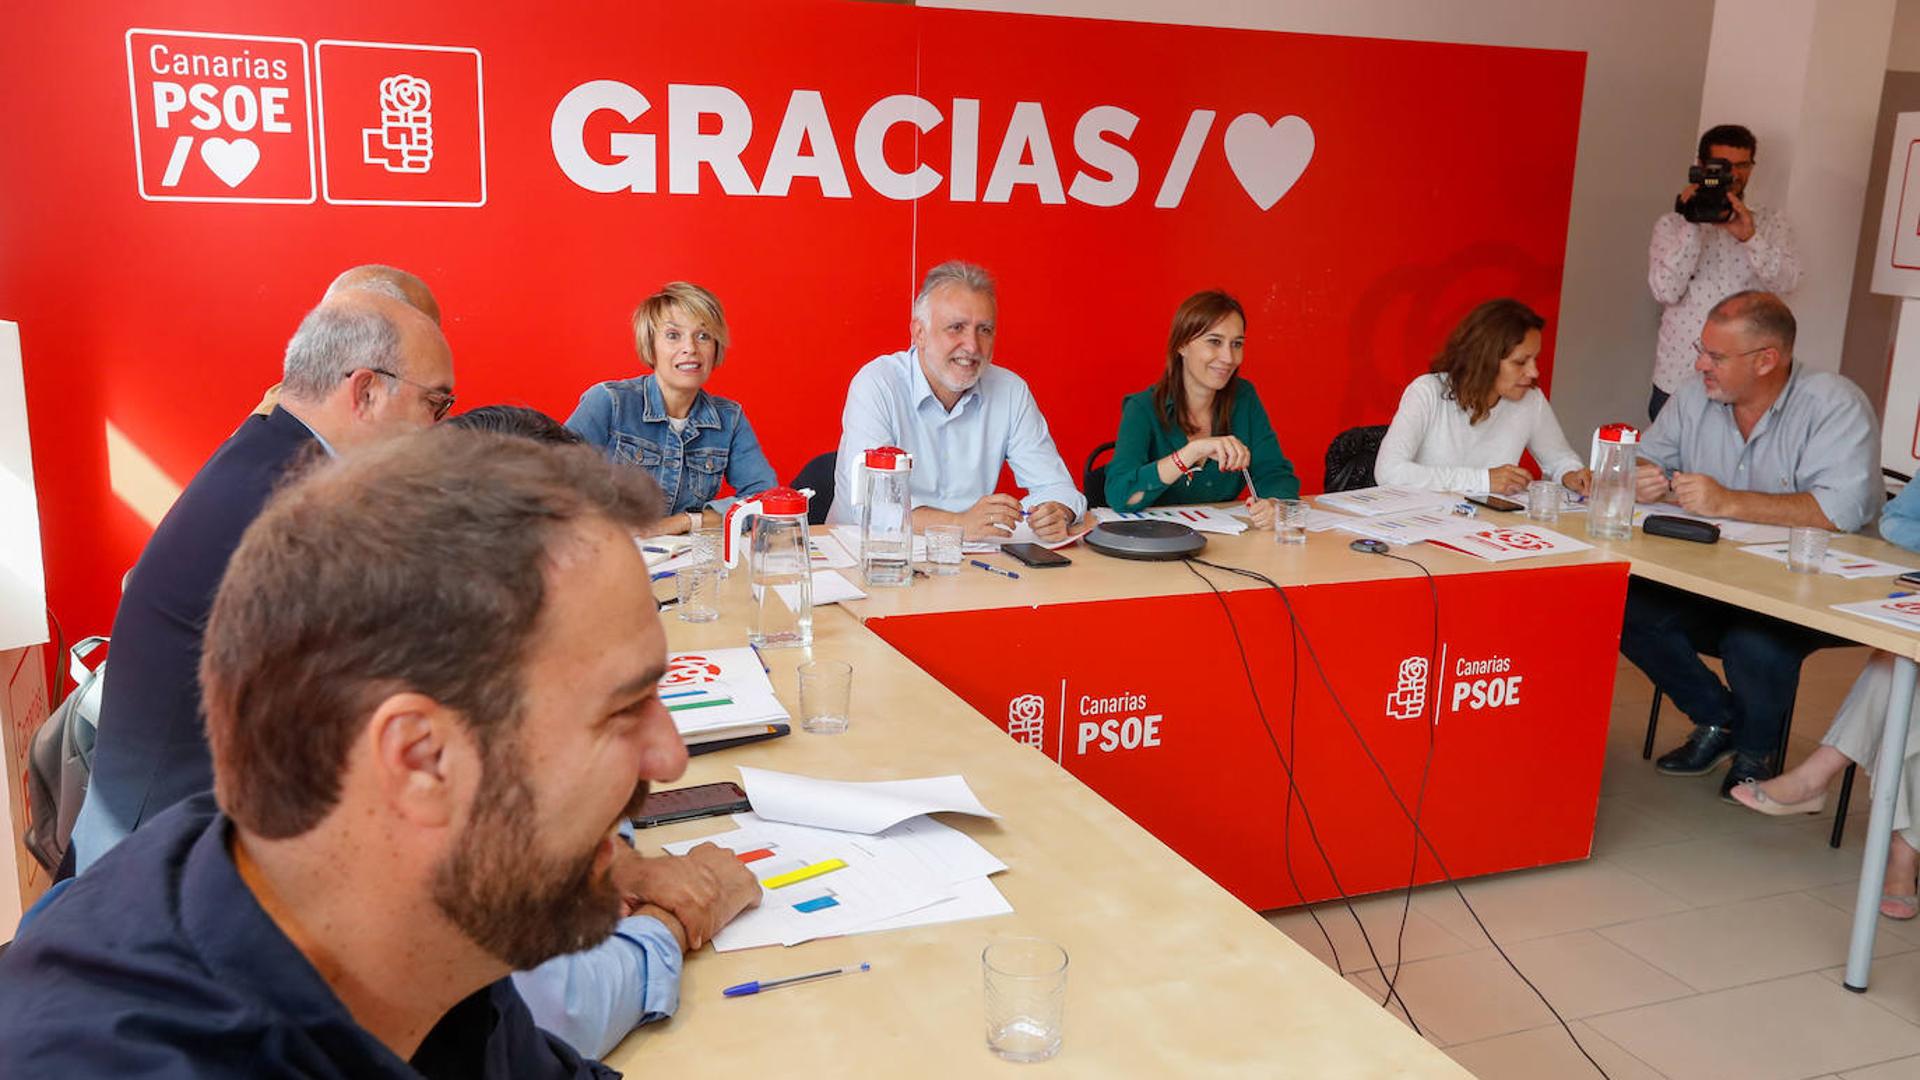 Dolores Corujo and Héctor Gómez, PSOE candidates